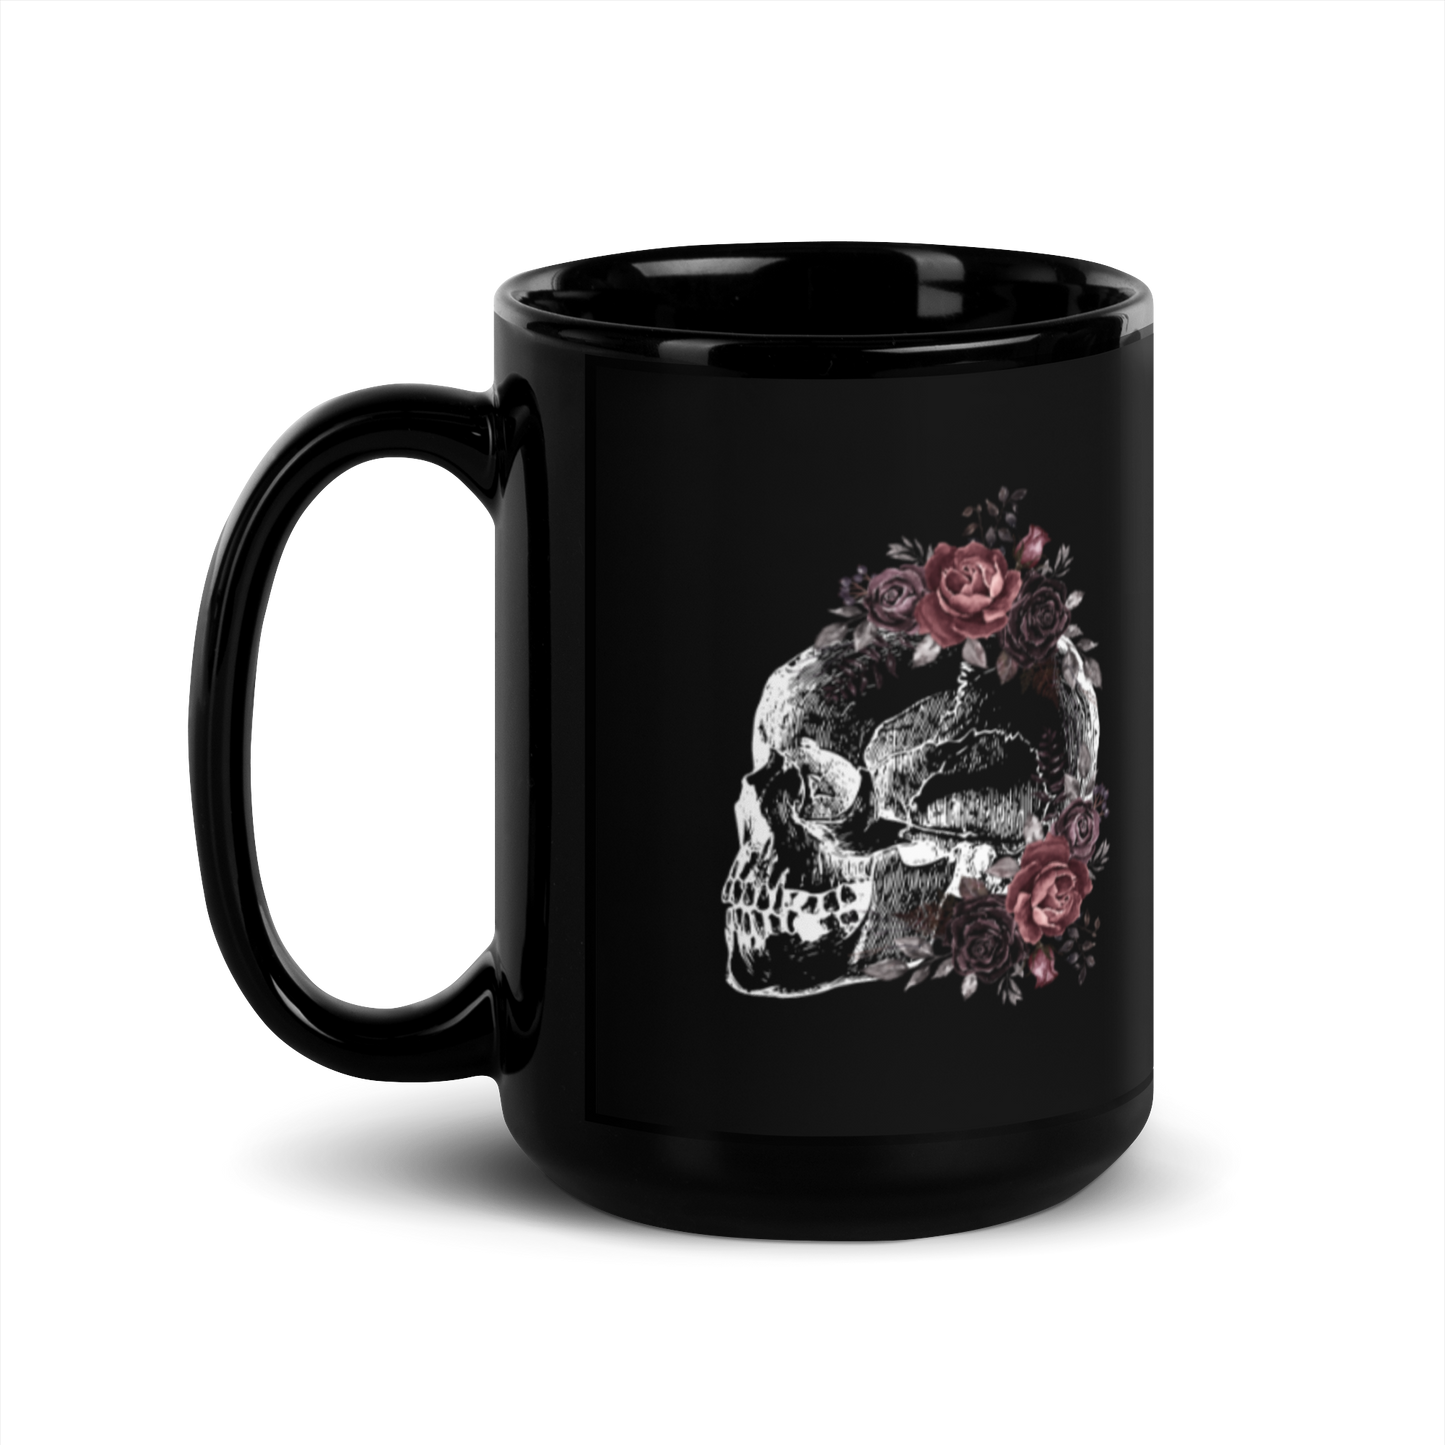 Death & Roses Black Glossy Mug